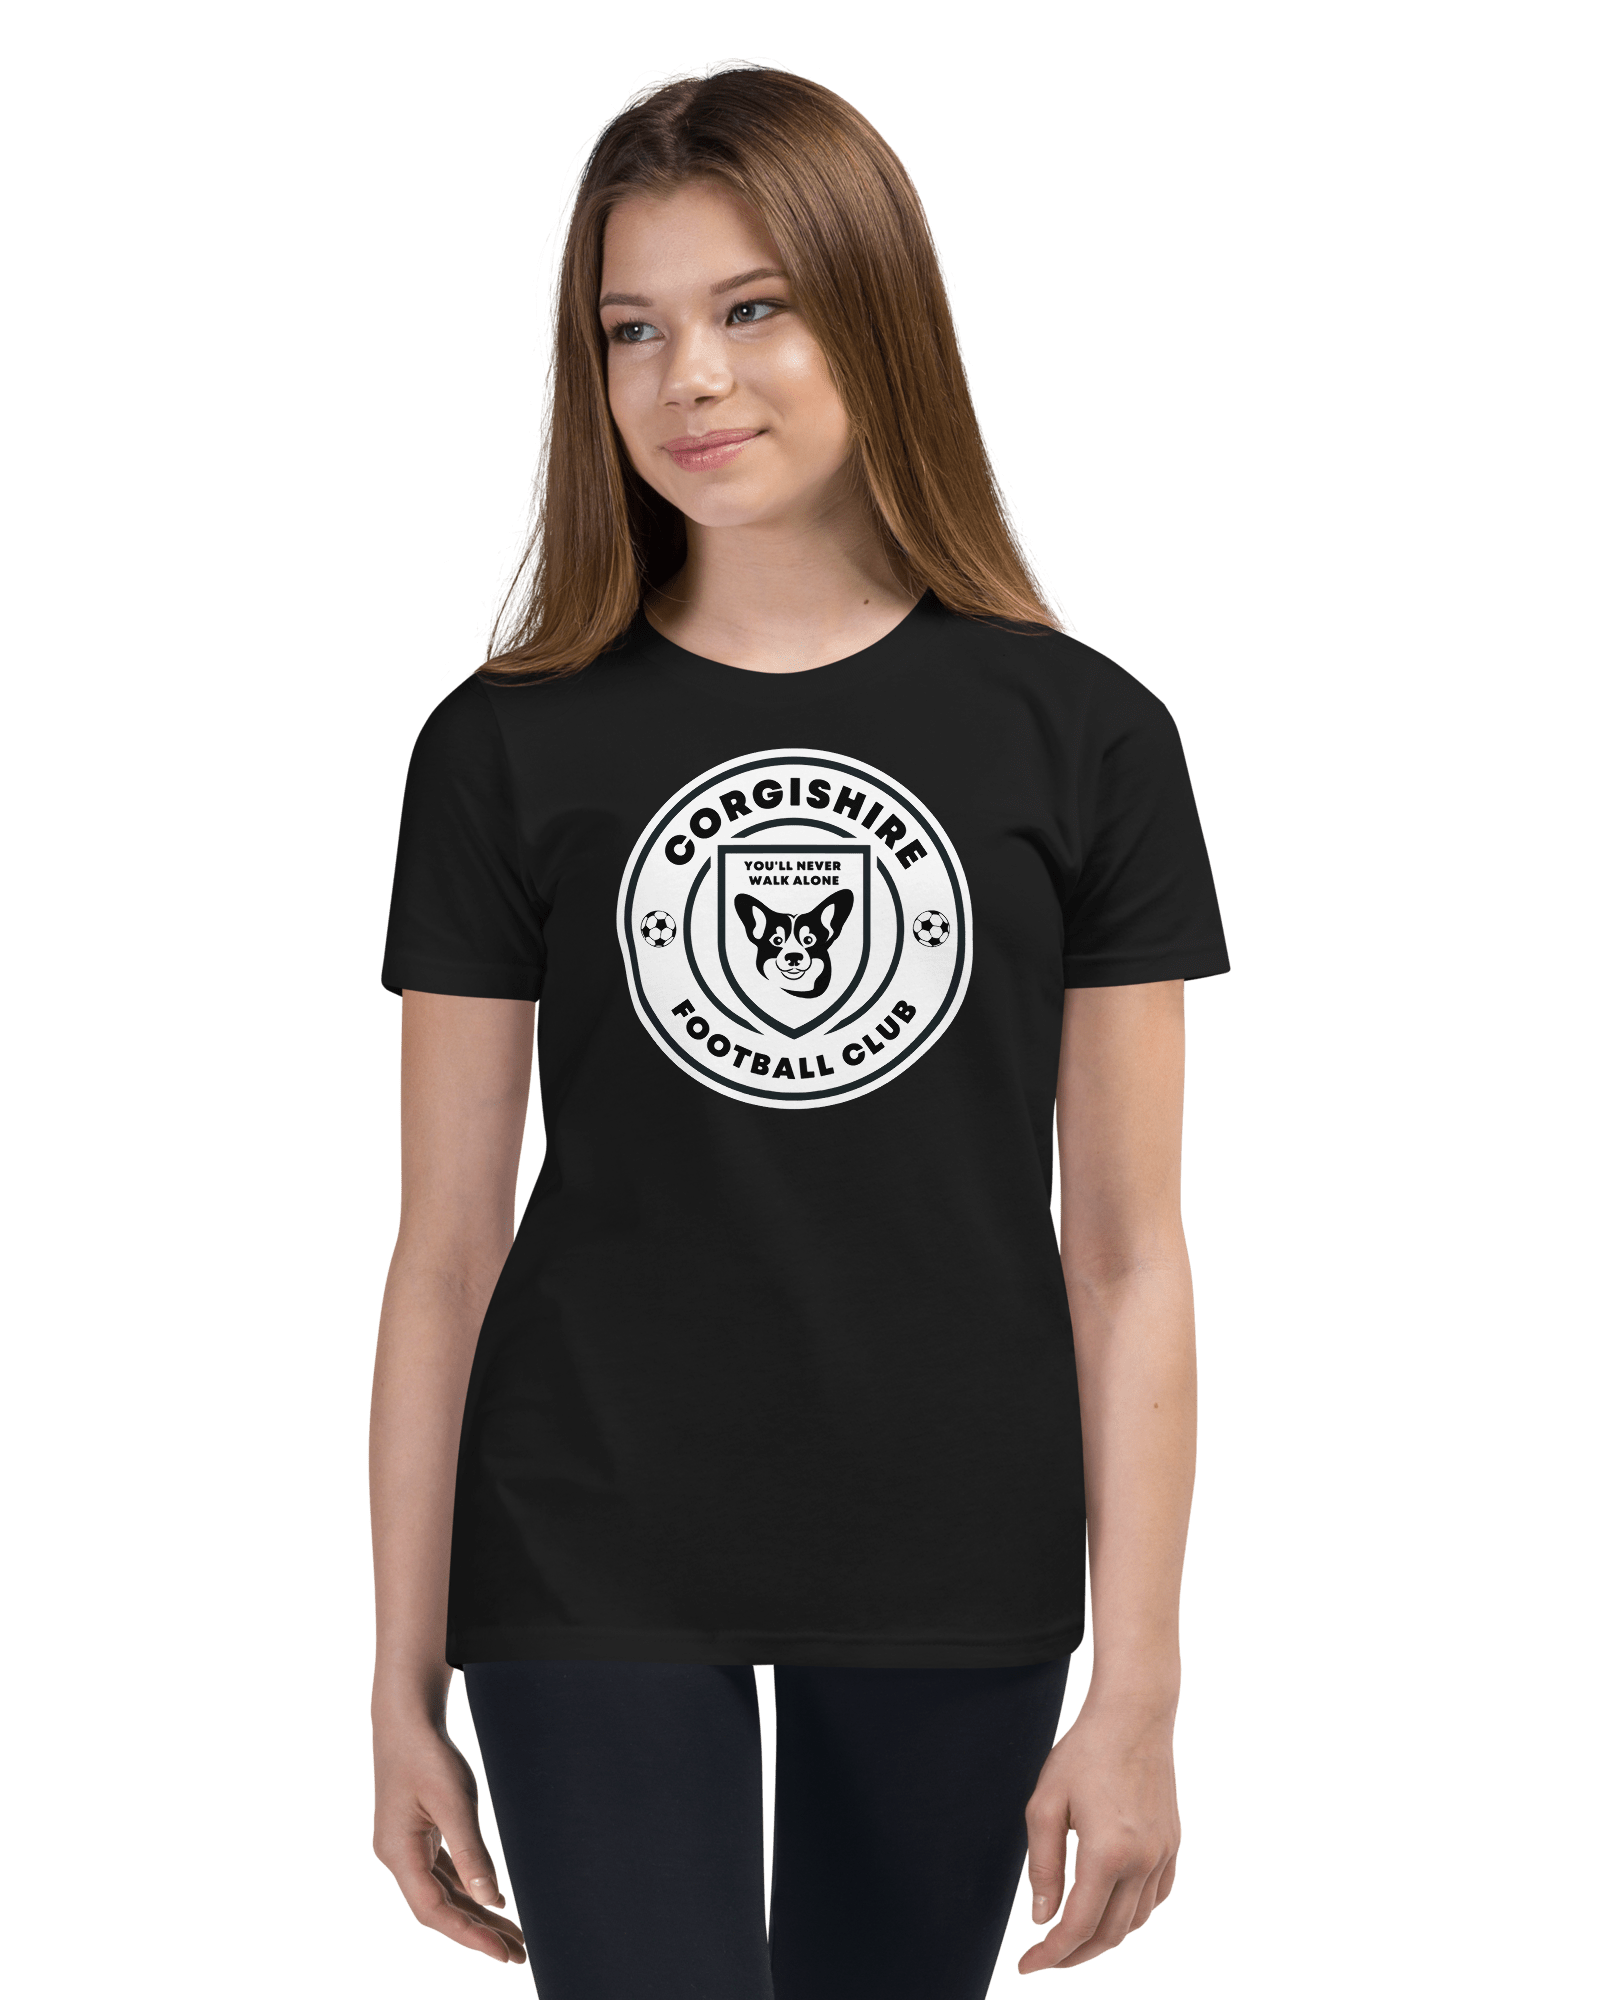 Corgishire FC Youth T-shirt Black / S Shirts & Tops Jolly & Goode